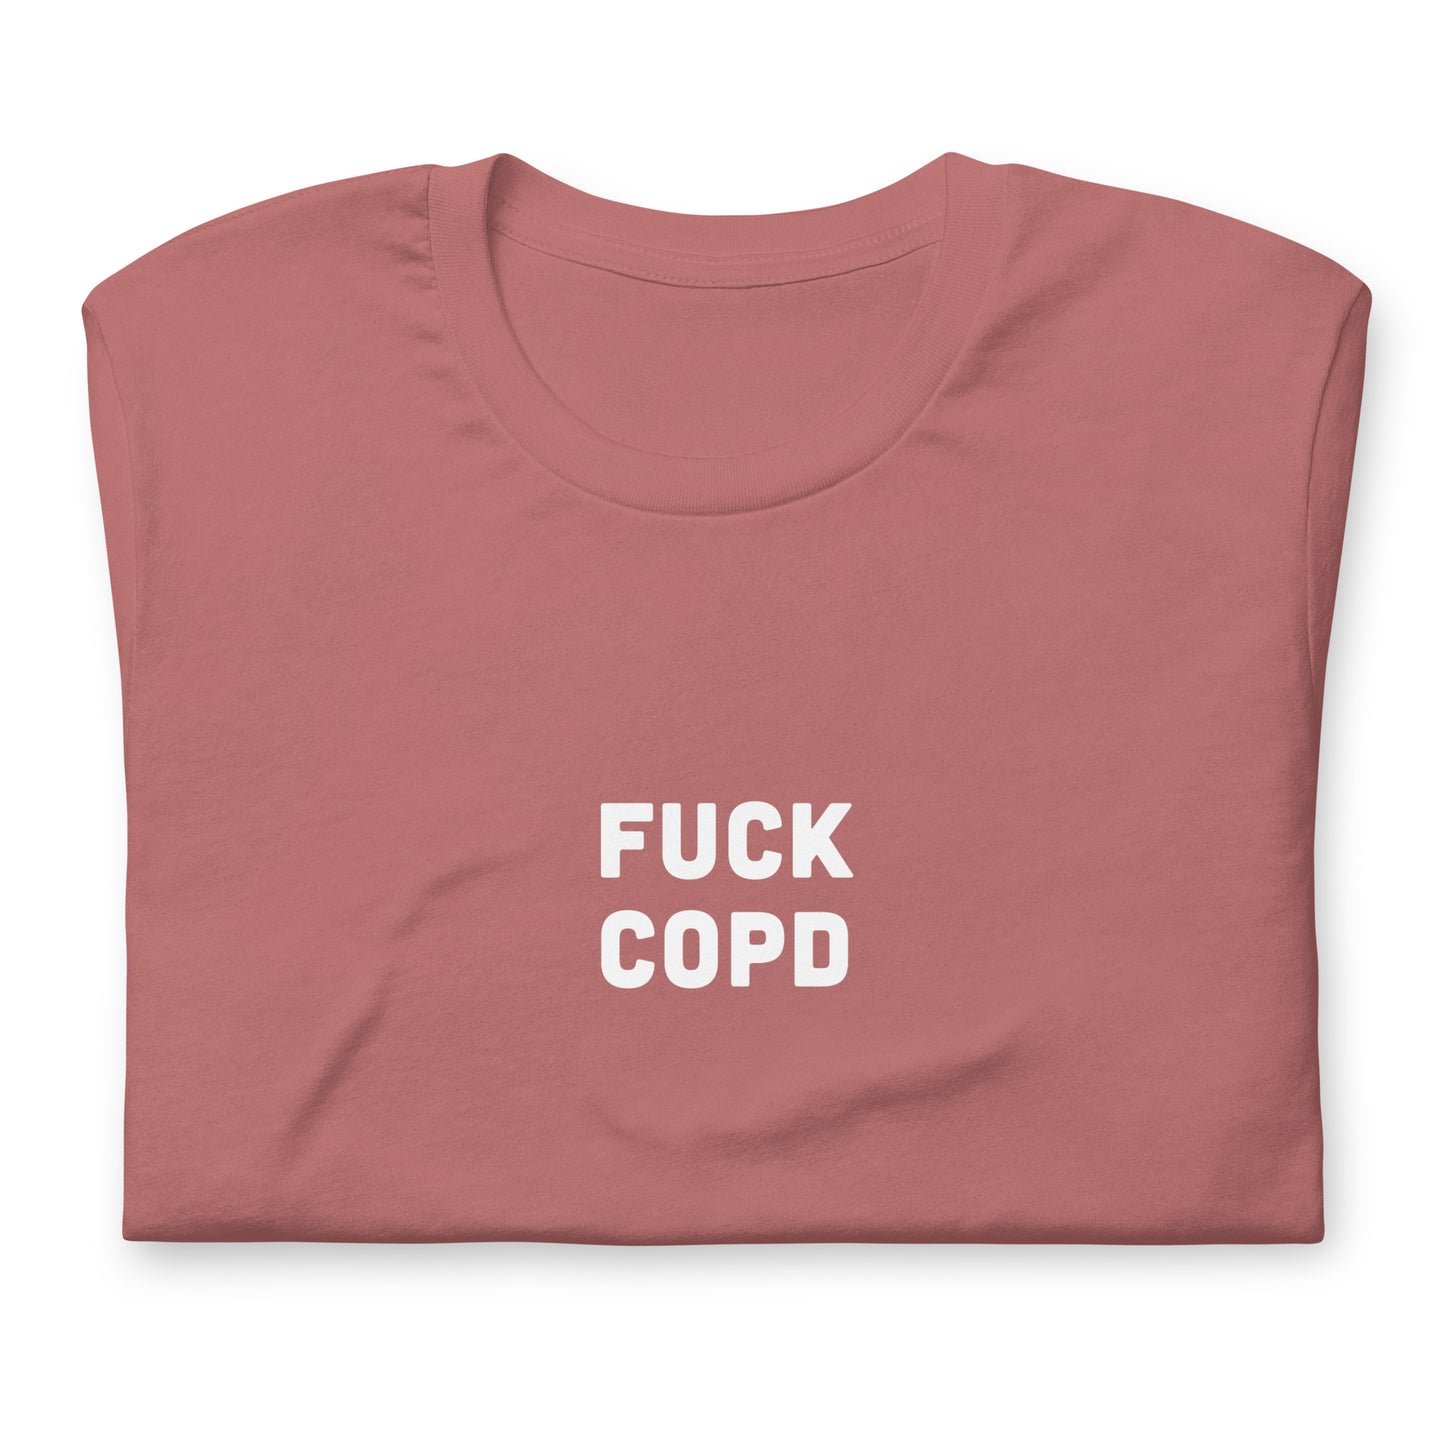 Fuck Copd T-Shirt Size XL Color Navy